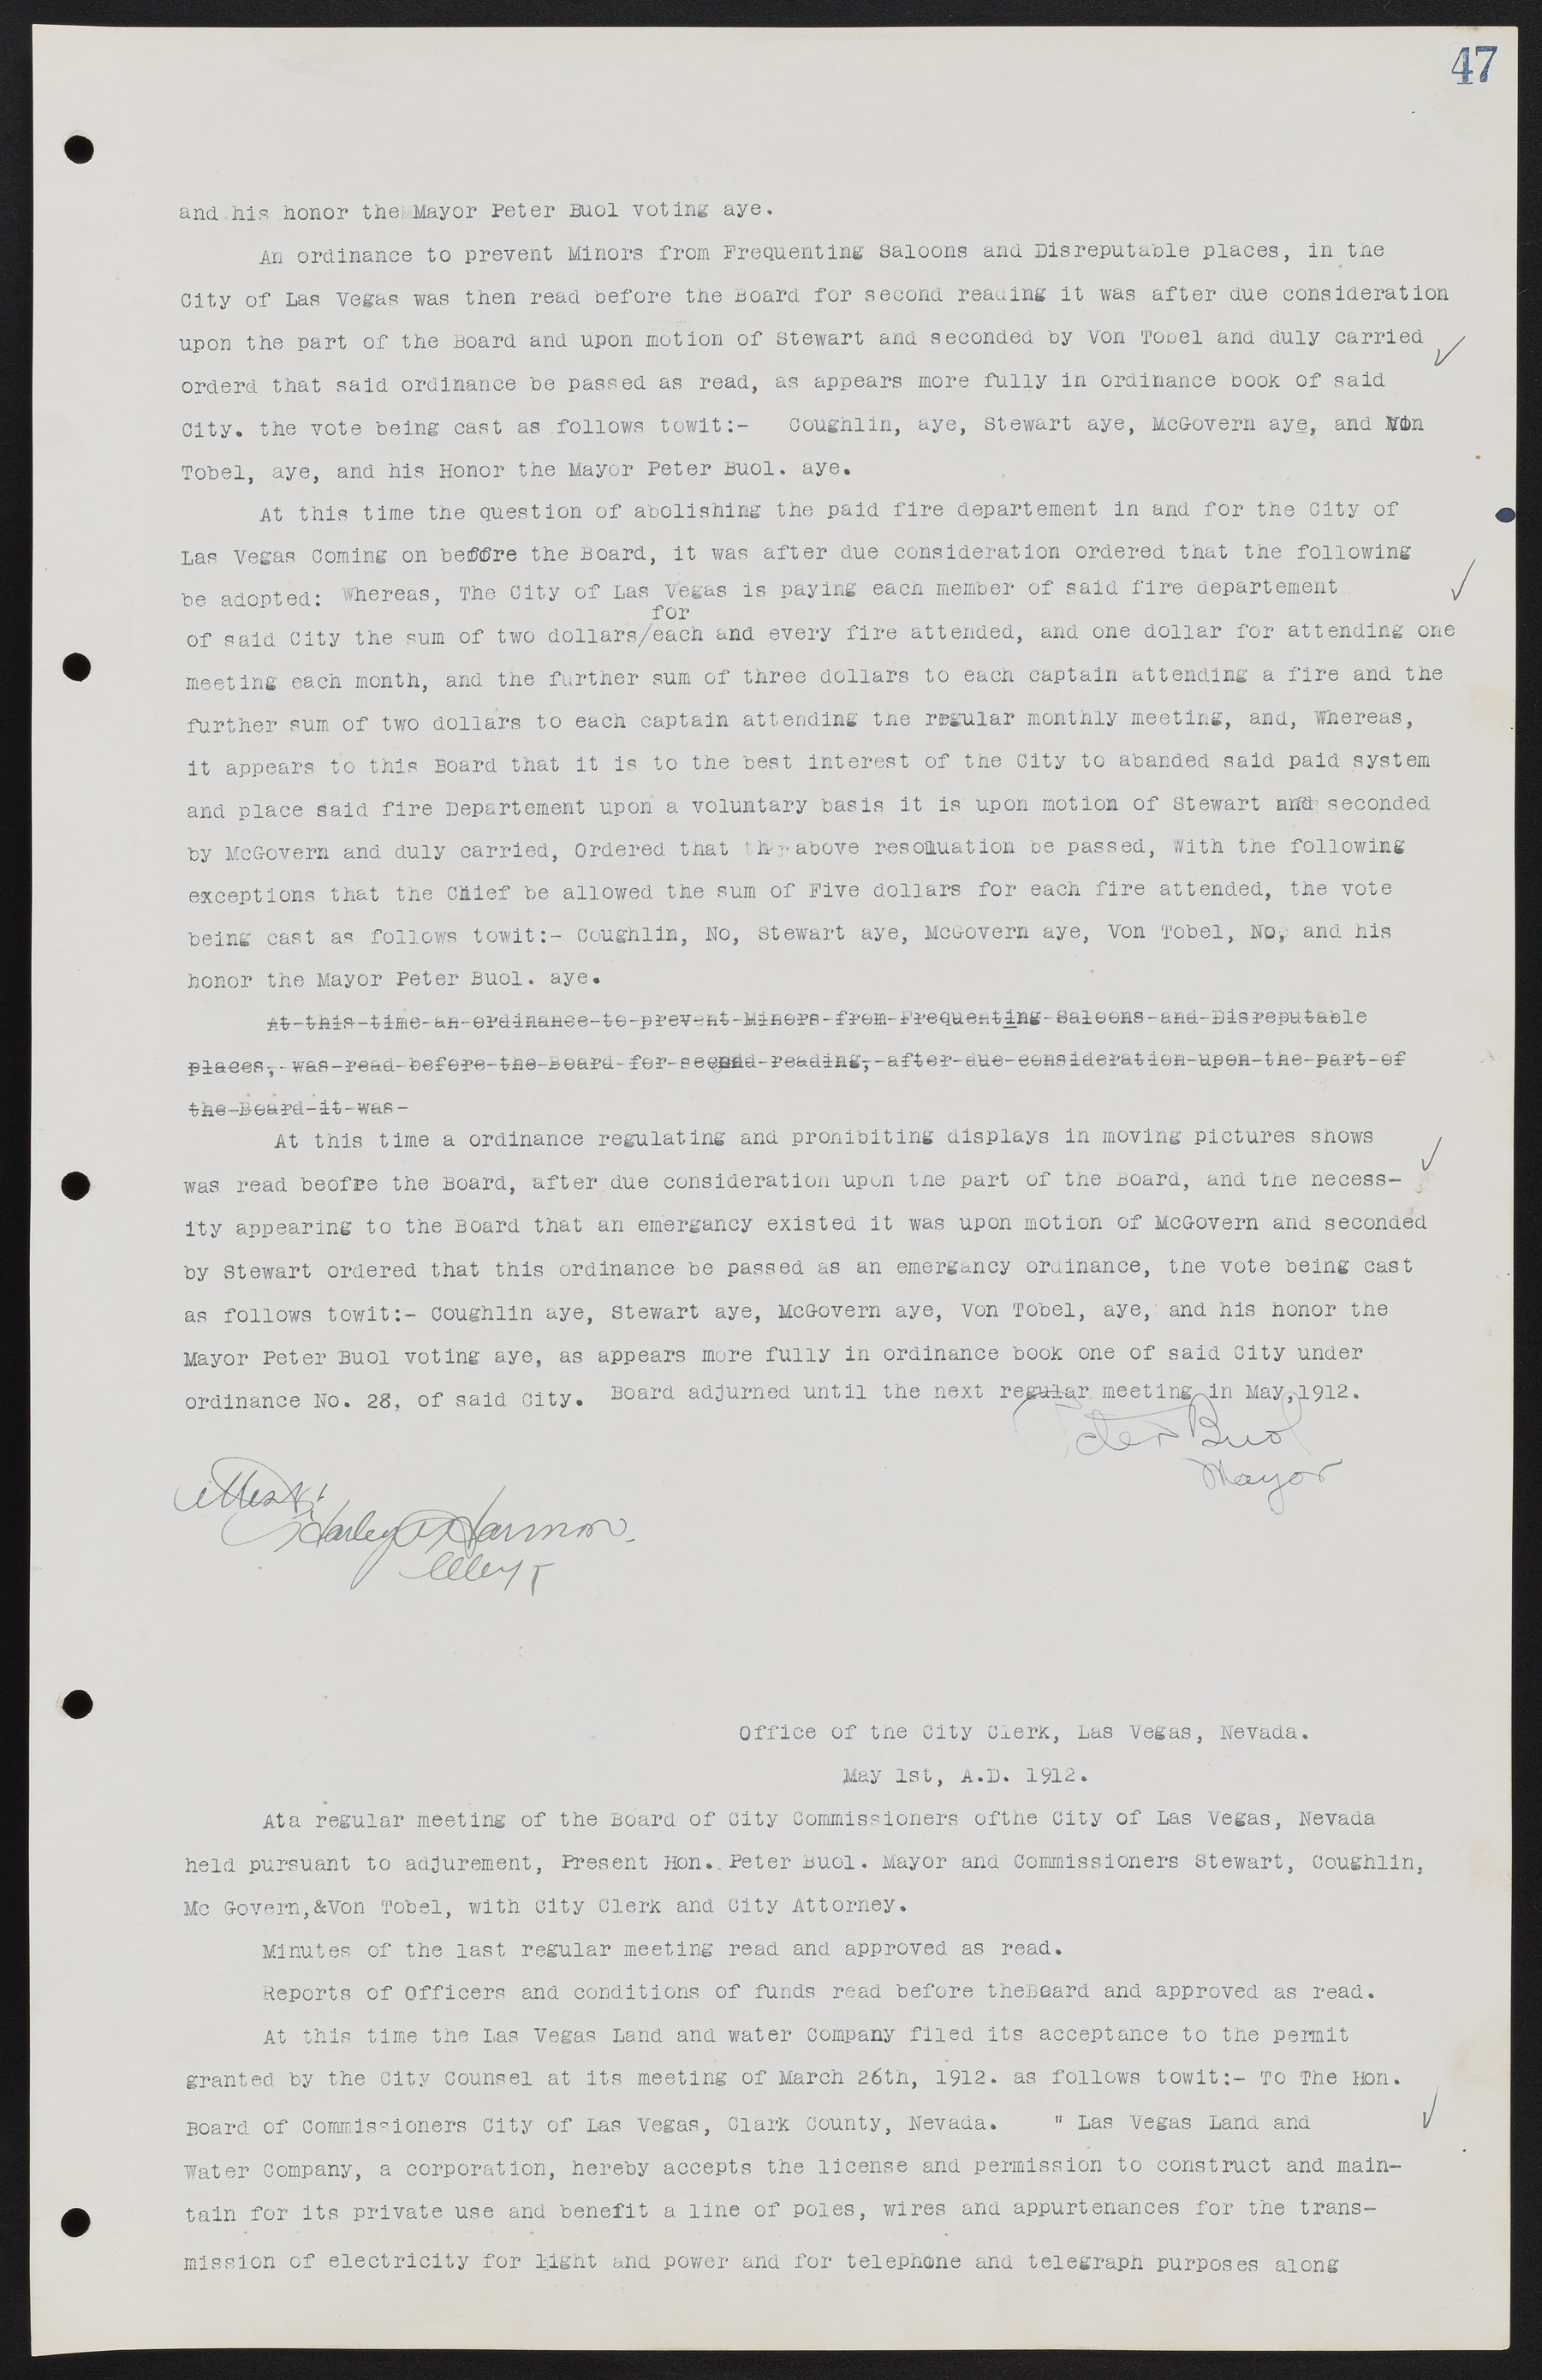 Las Vegas City Commission Minutes, June 22, 1911 to February 7, 1922, lvc000001-61